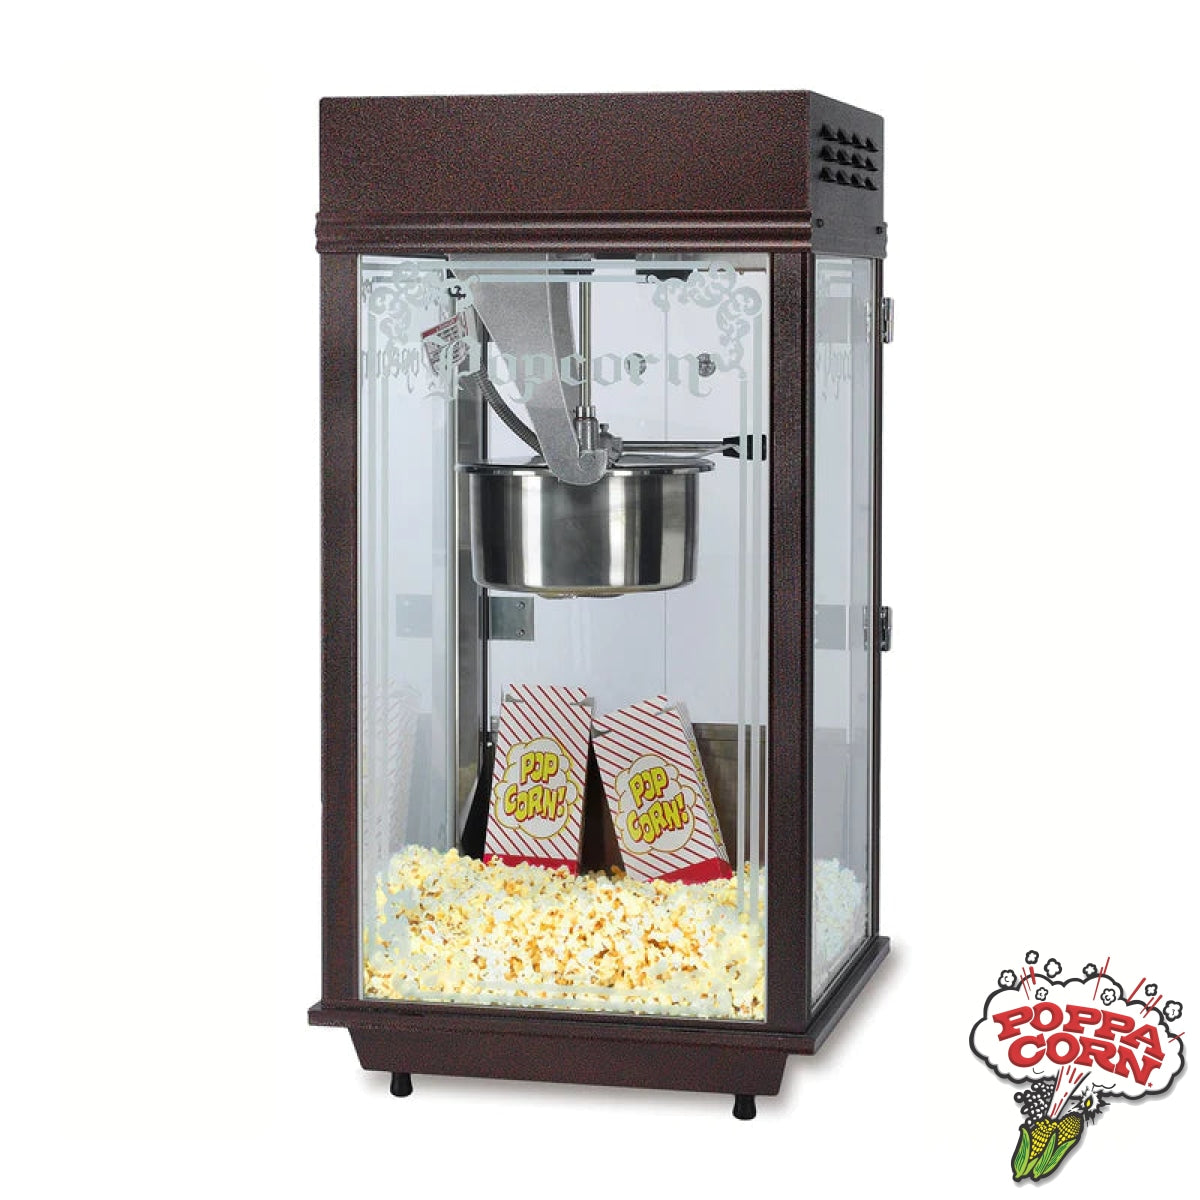 MegaPop® 12 oz. Popcorn Machine - GM2212 - Poppa Corn Corp